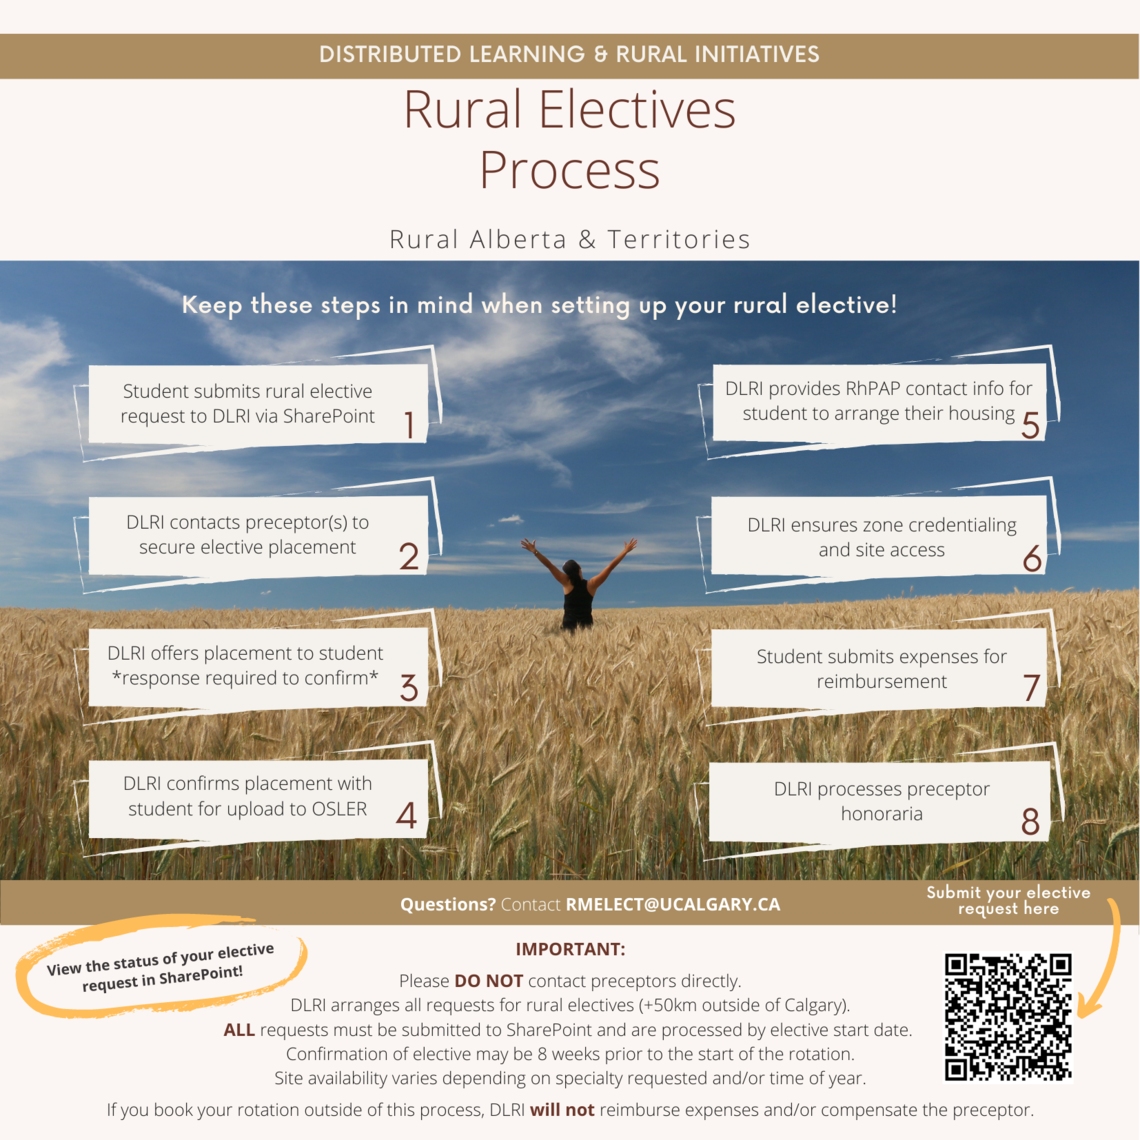 Rural Electives Process